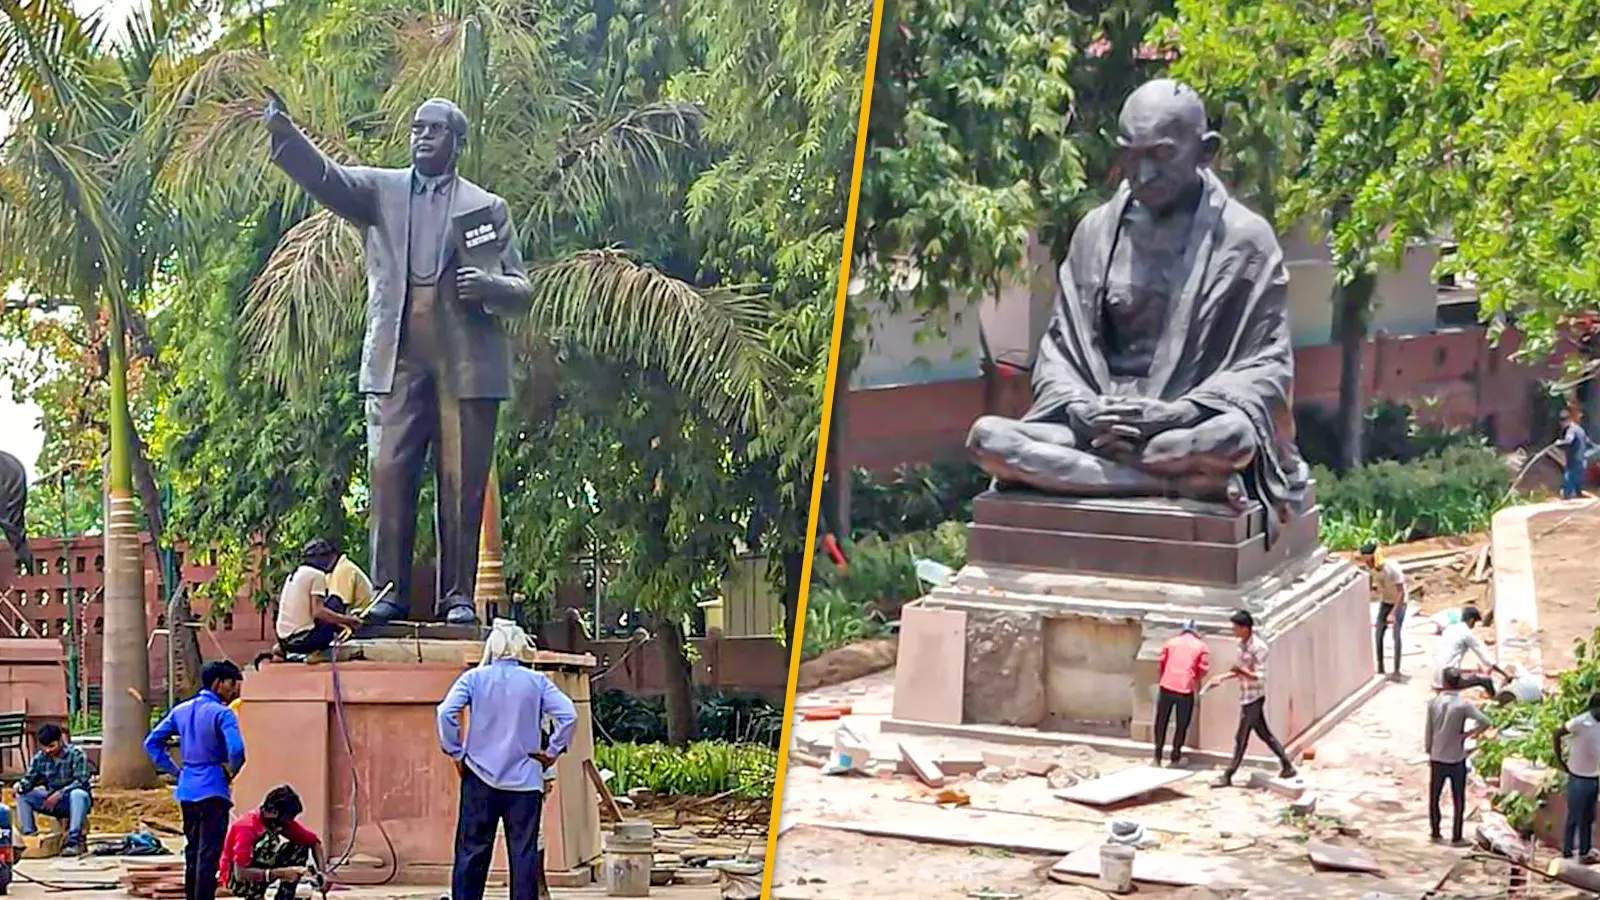 Ambedkar Gandhi statues